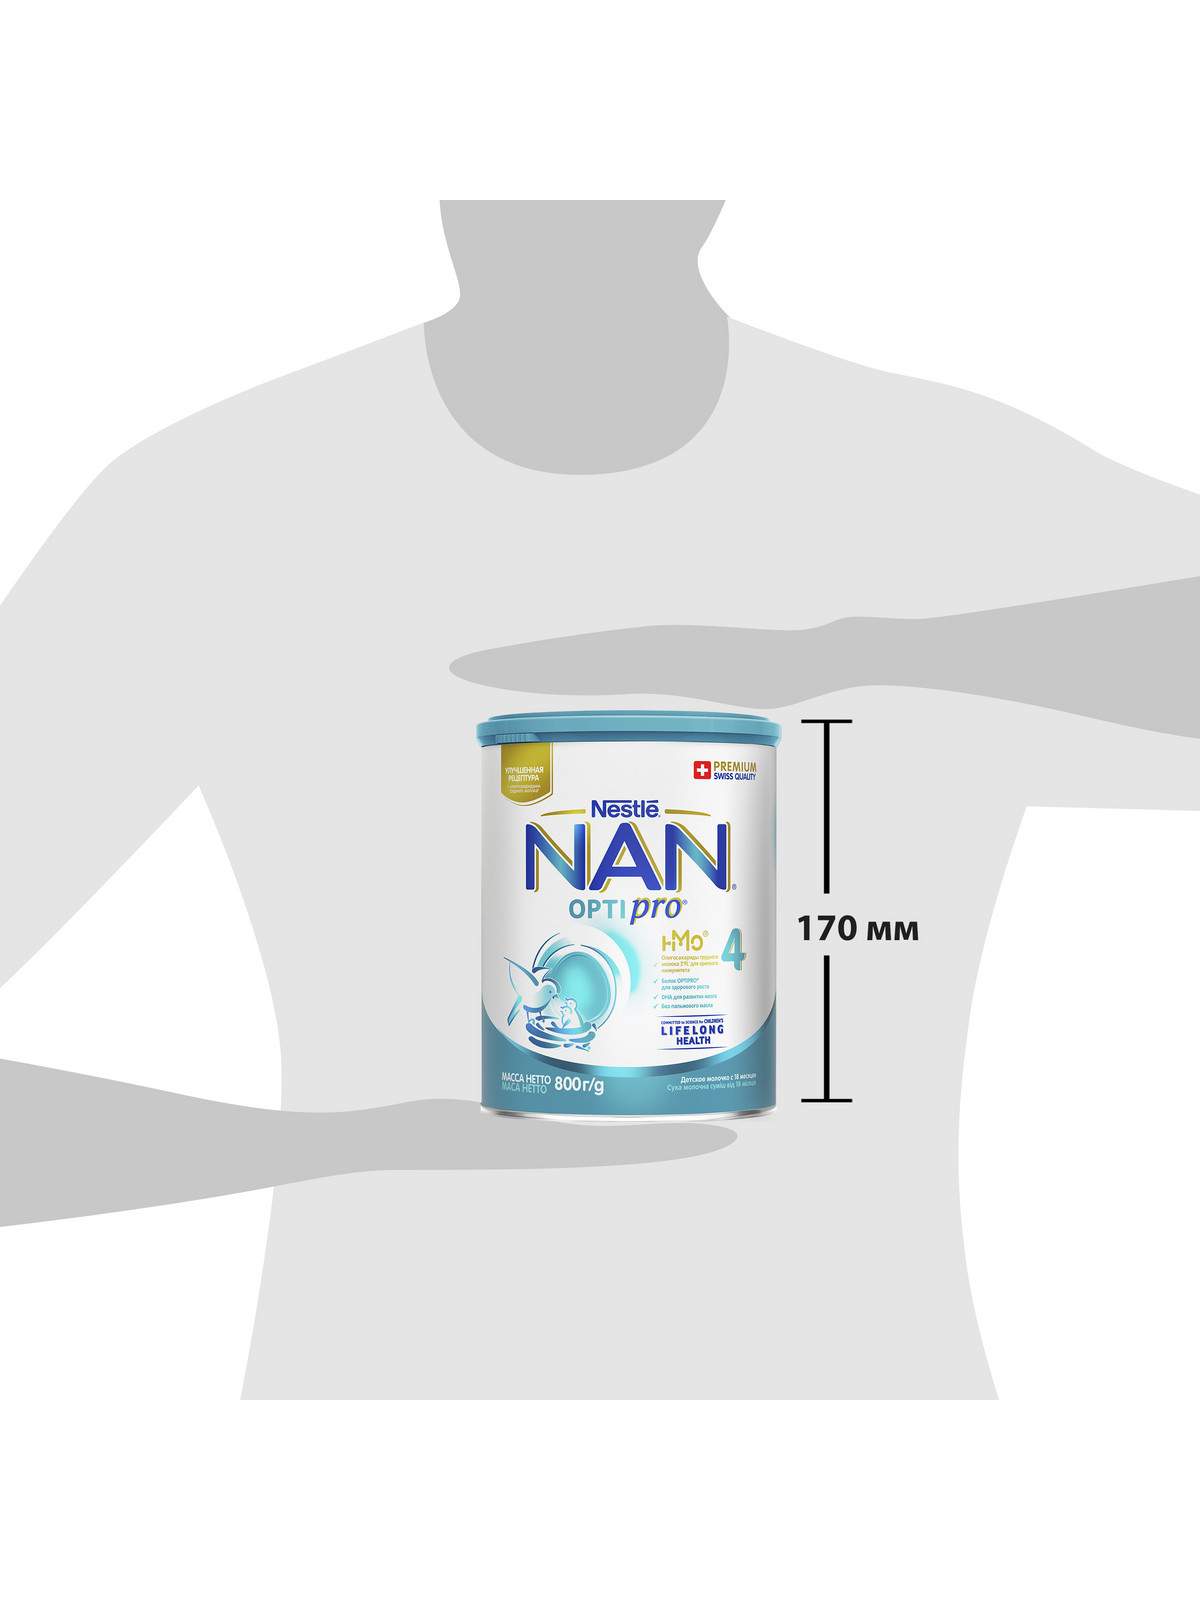 Молочная смесь NAN Optipro 4 от 18 мес. 800 г